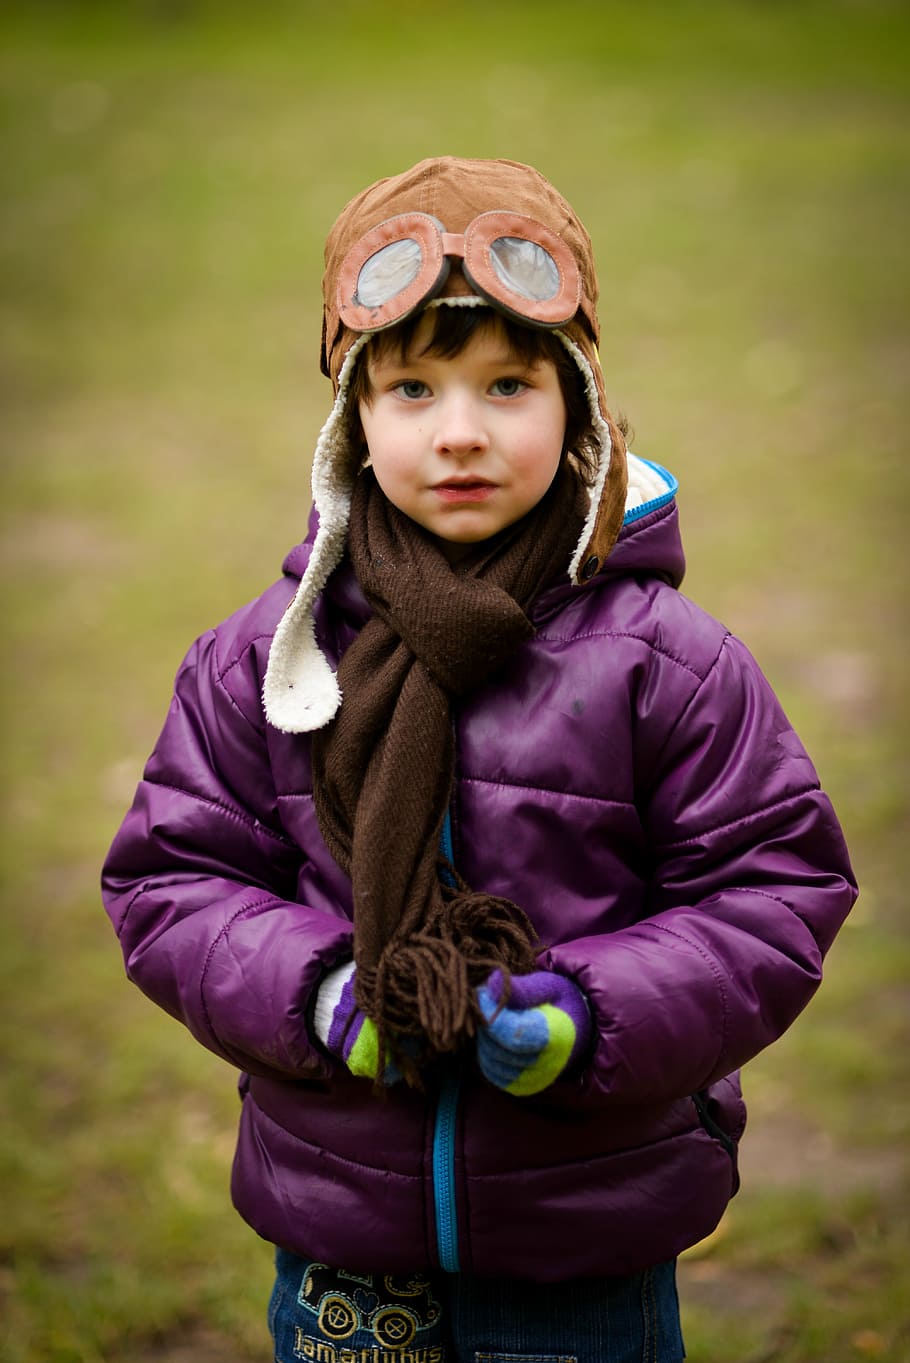 boy, autumn, cap, jacket, baby, park, photographing children, childhood, child, one person